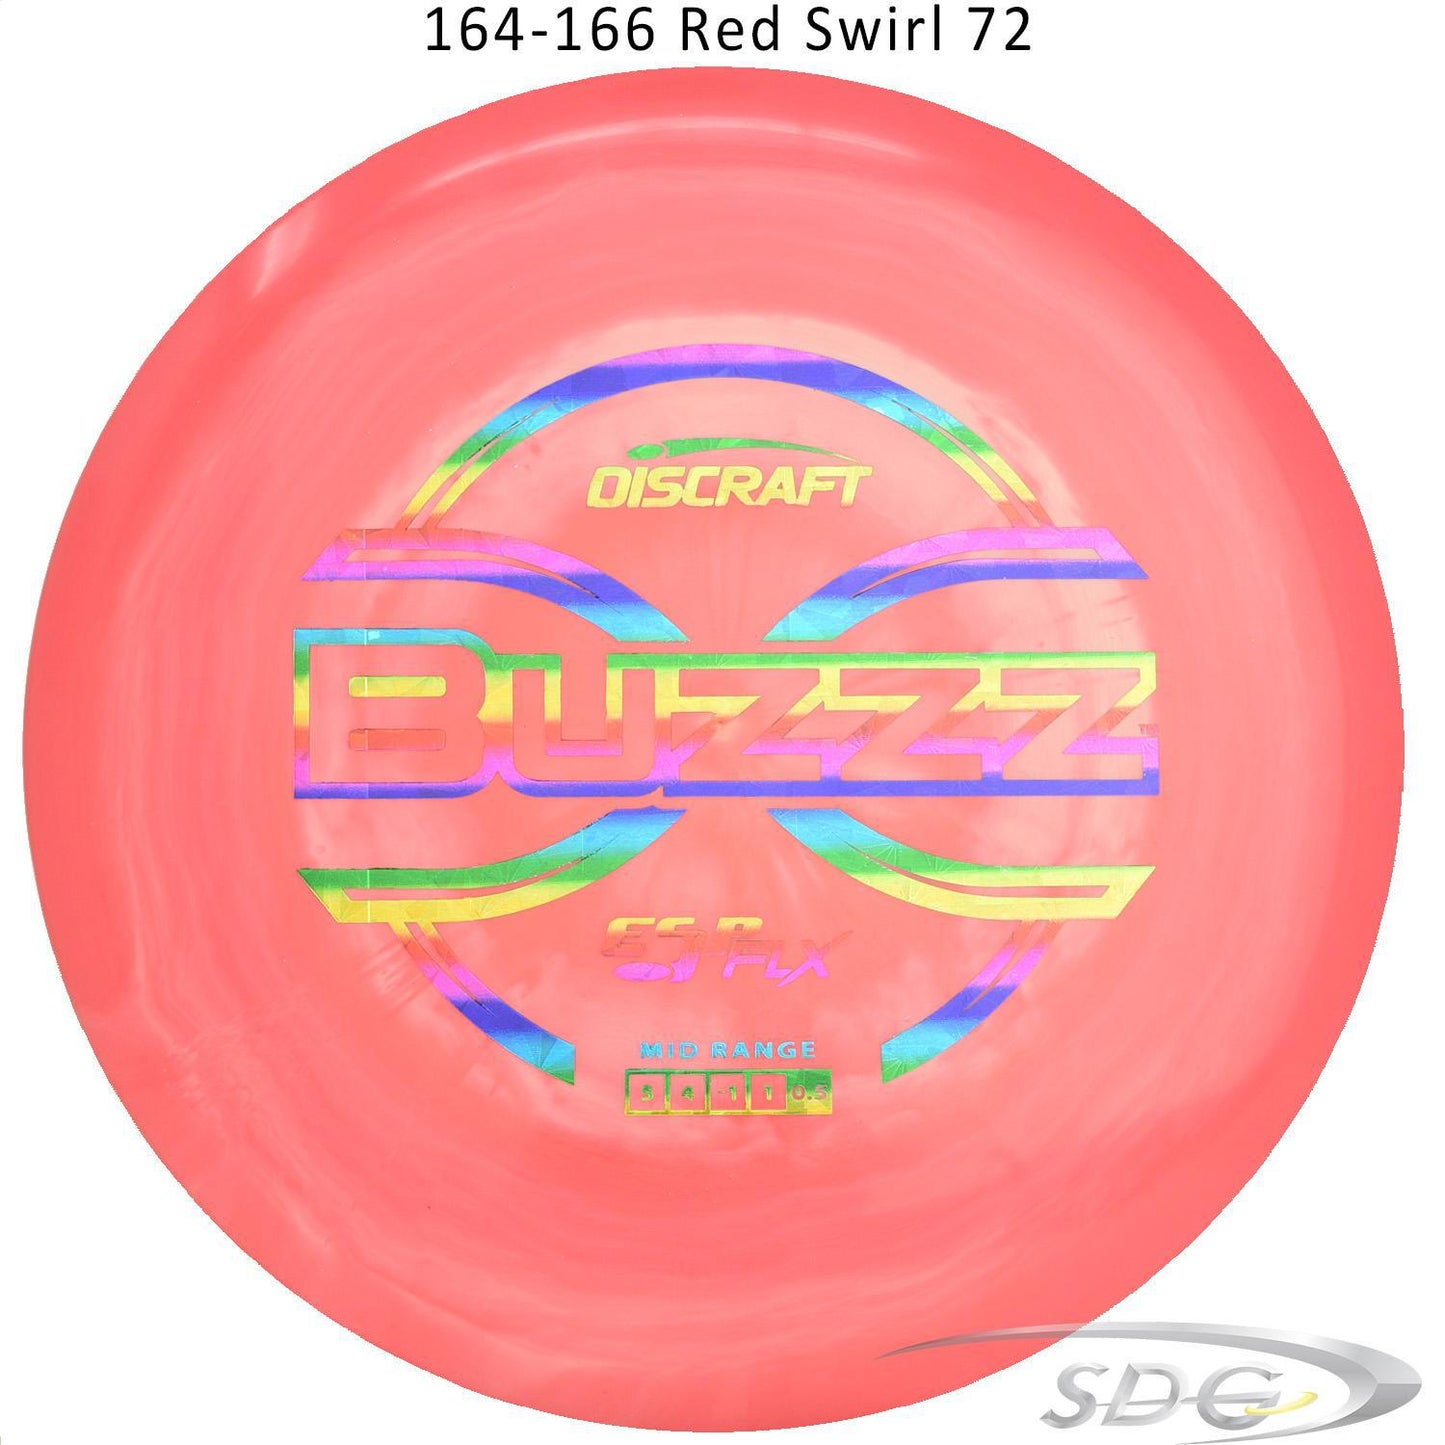 dicraft-esp-flx-buzzz-disc-golf-mid-range 160-163 Red Swirl 72